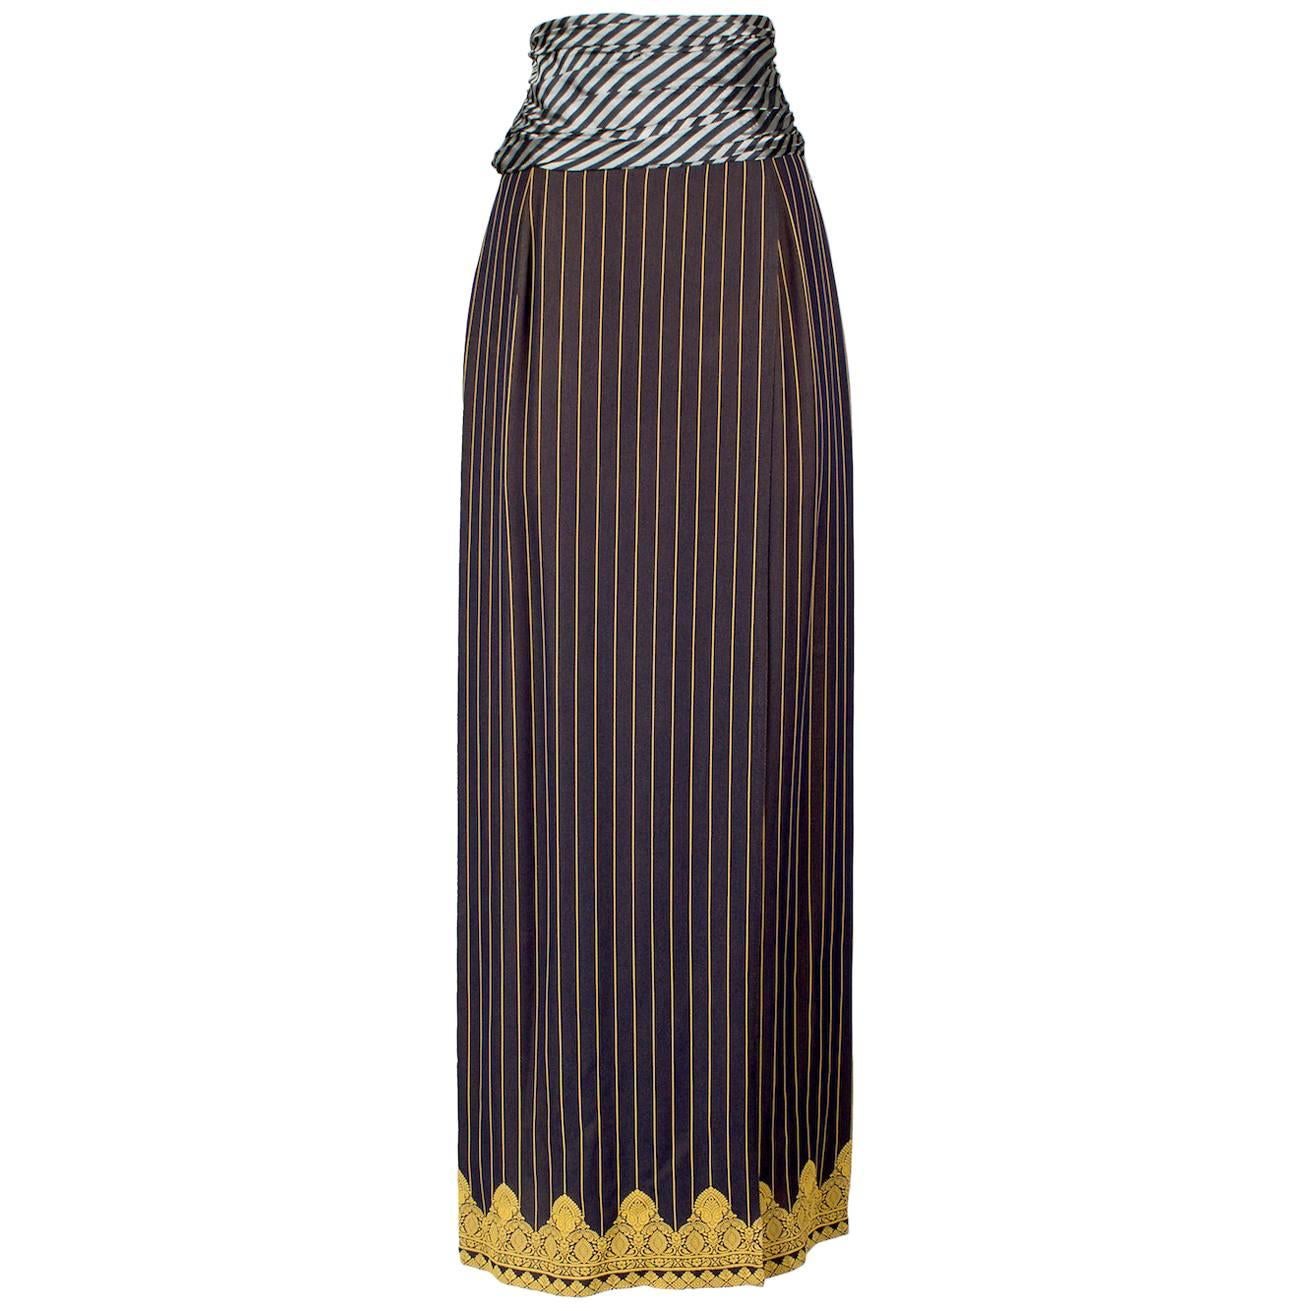 Jean Paul Gaultier Pinstripe Skirt with Grommet Back Belt circa 2000s